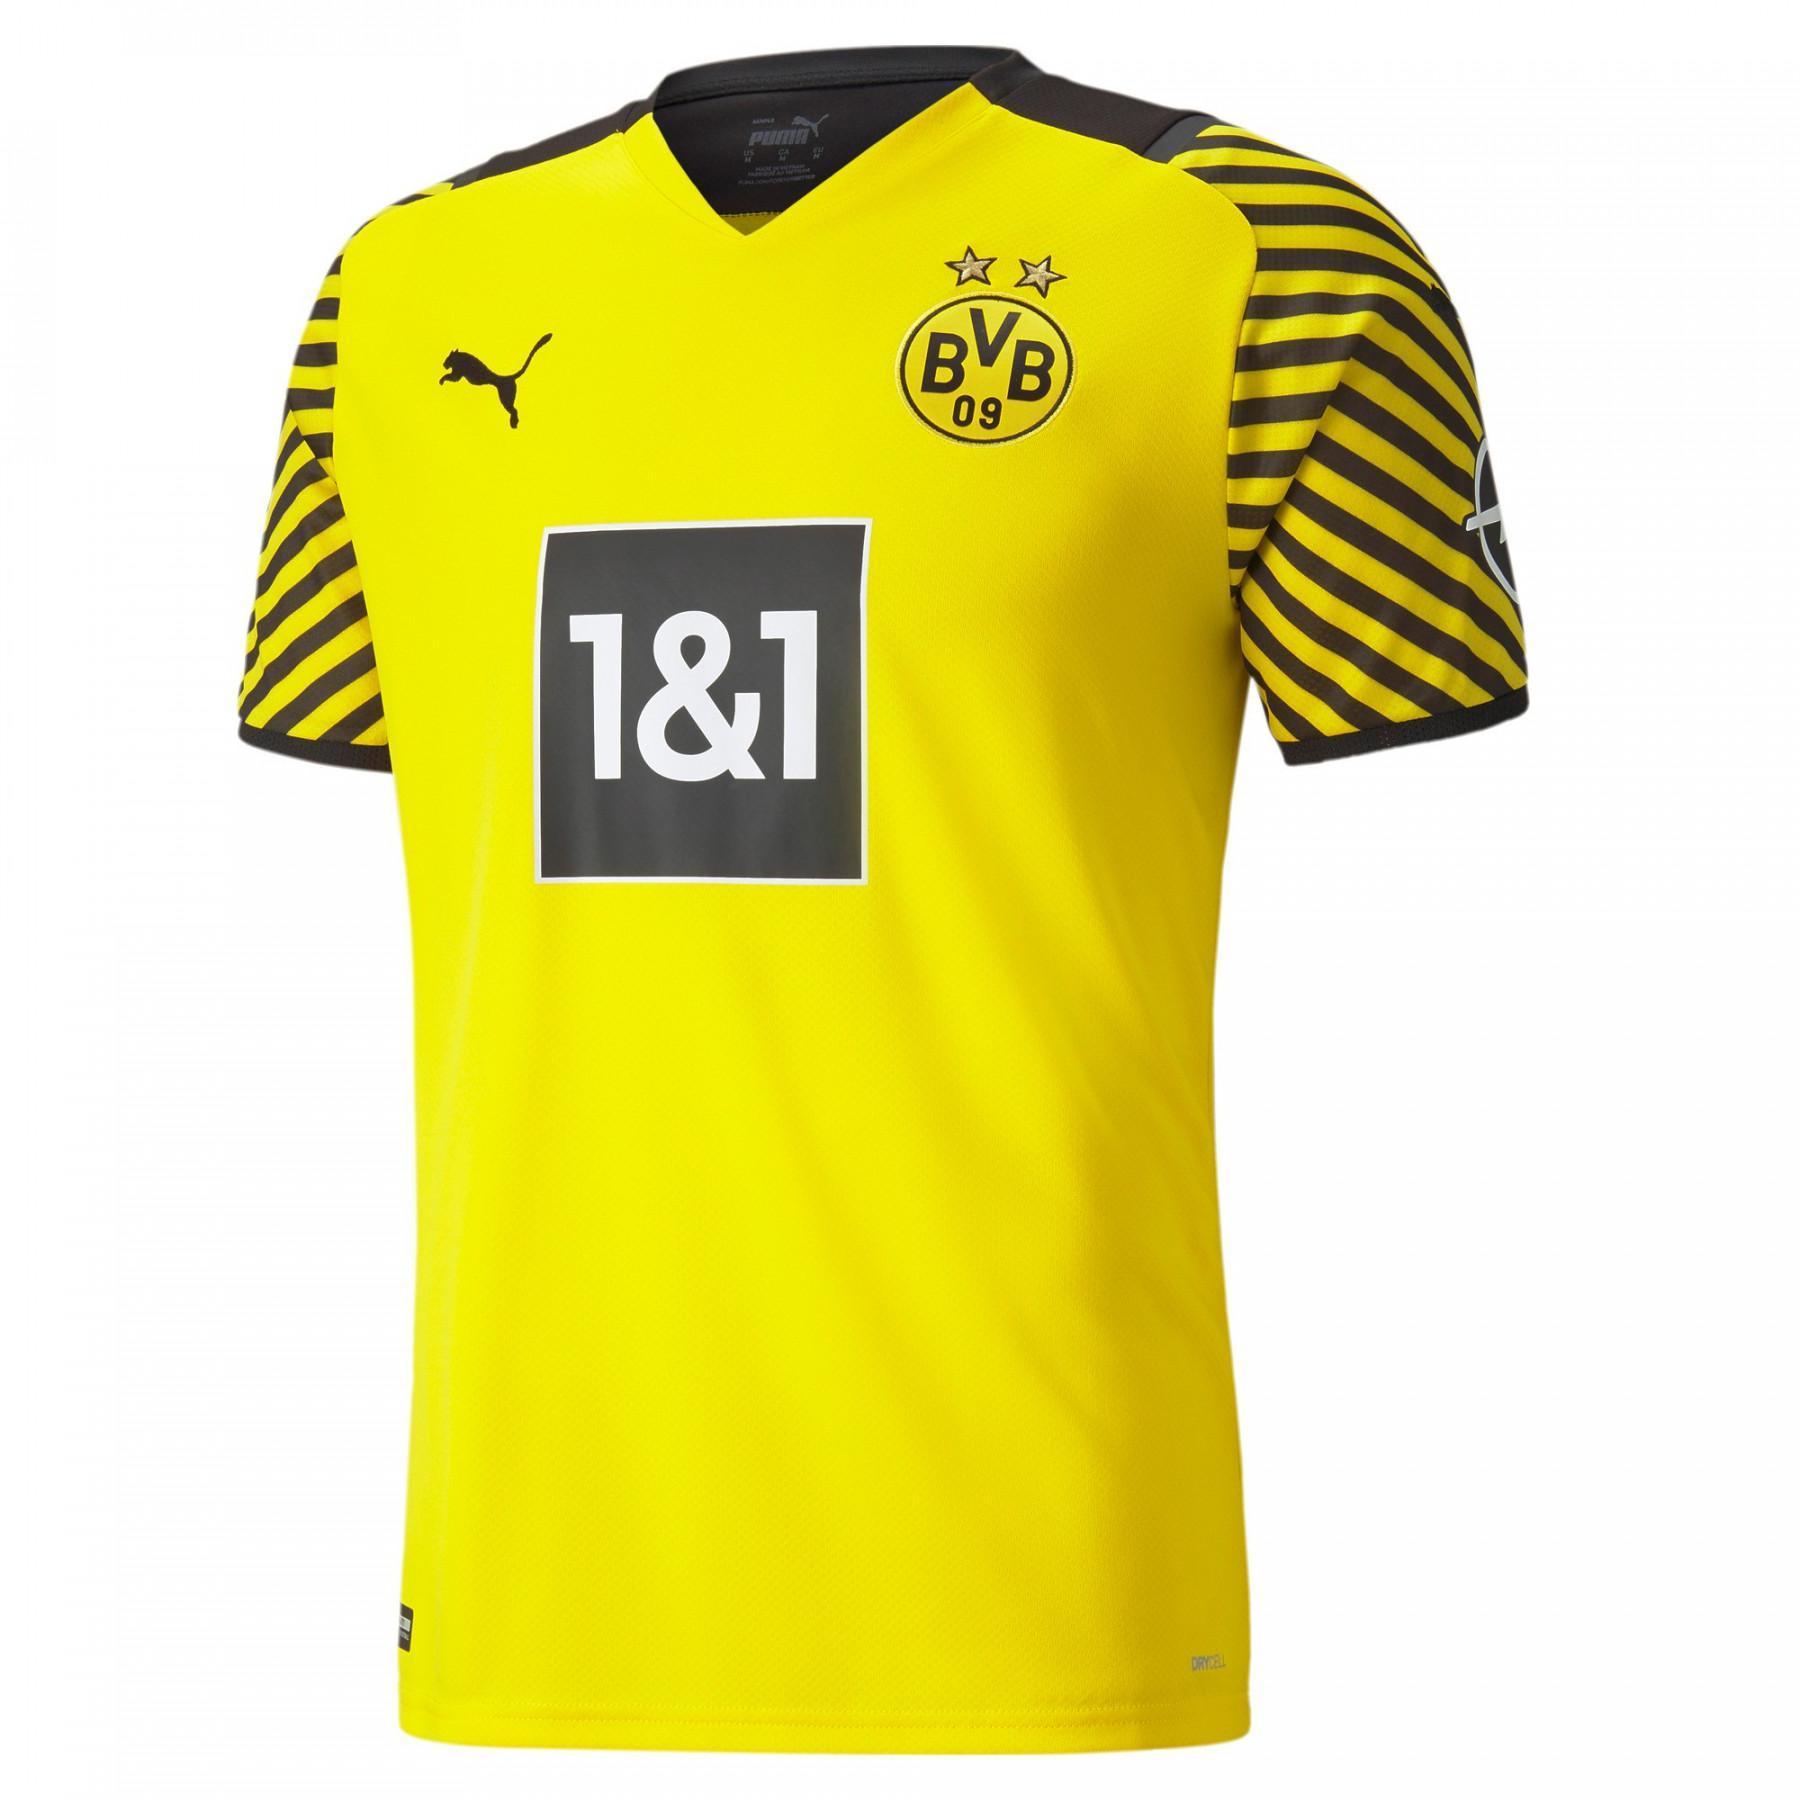 Home jersey Borussia Dortmund 2021/22